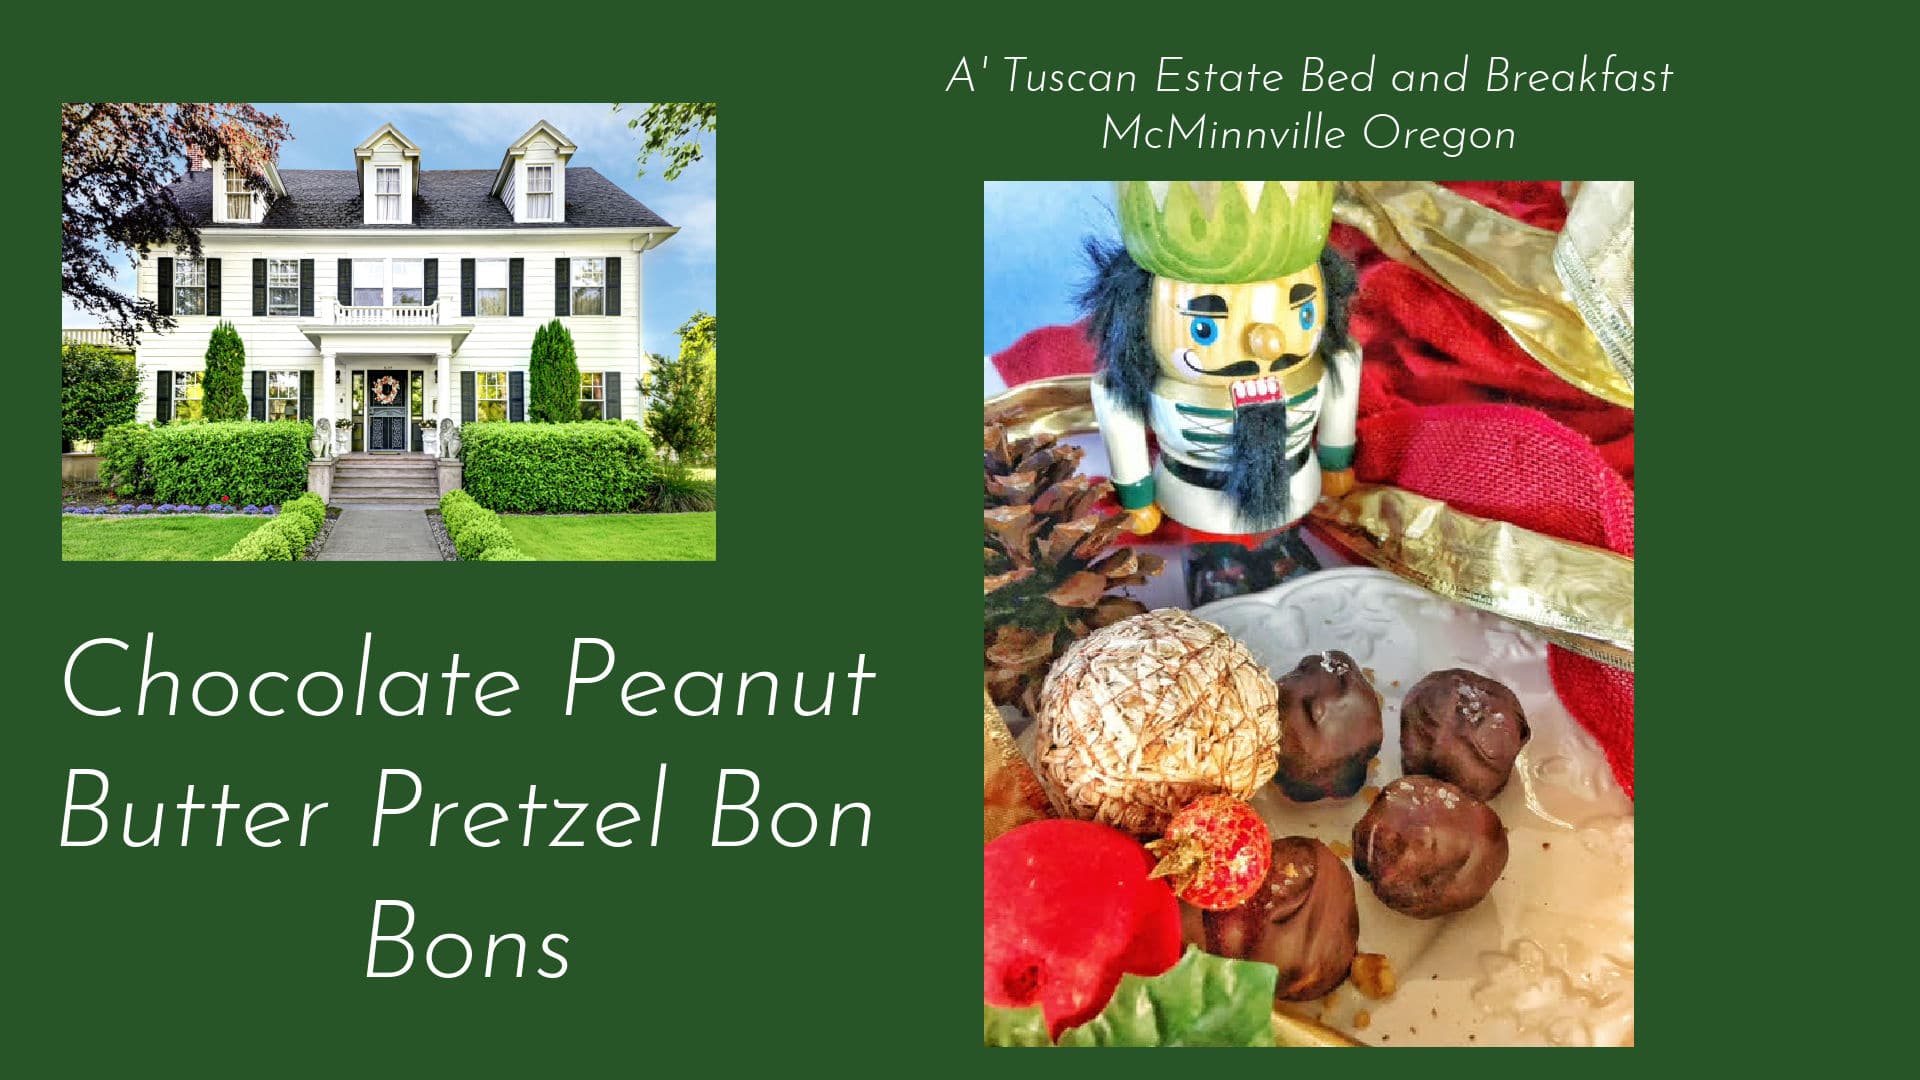 Chocolate Peanut Butter Bon Bons at A' Tuscan Estate B&B